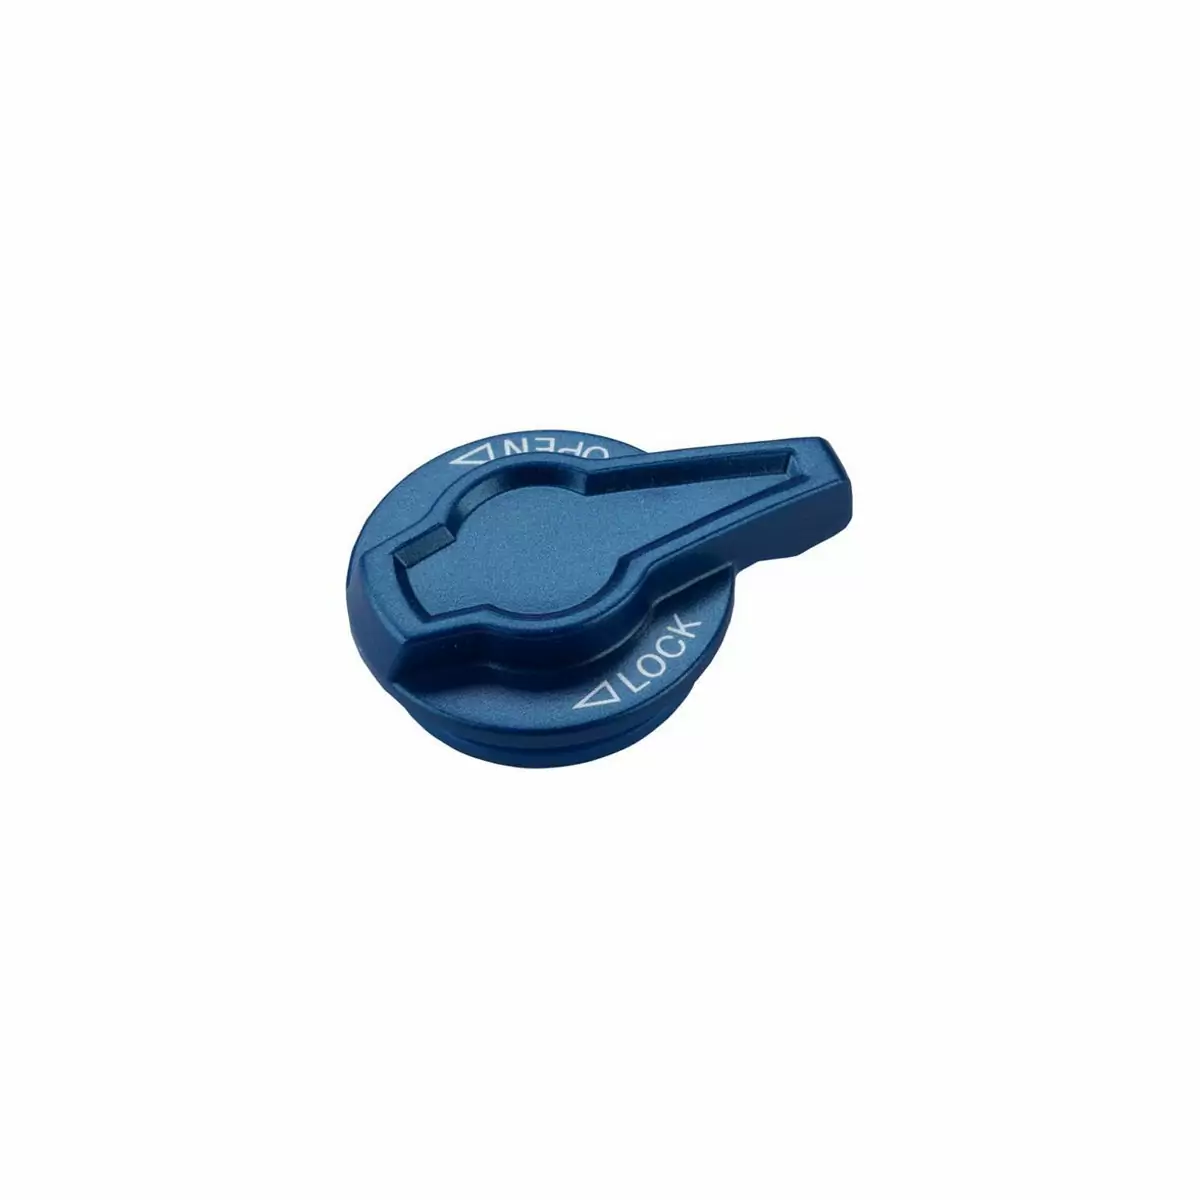 blue swivel cap for the cartridge to SF15-XCR-LO/SF16-Raidon XC-LO - image